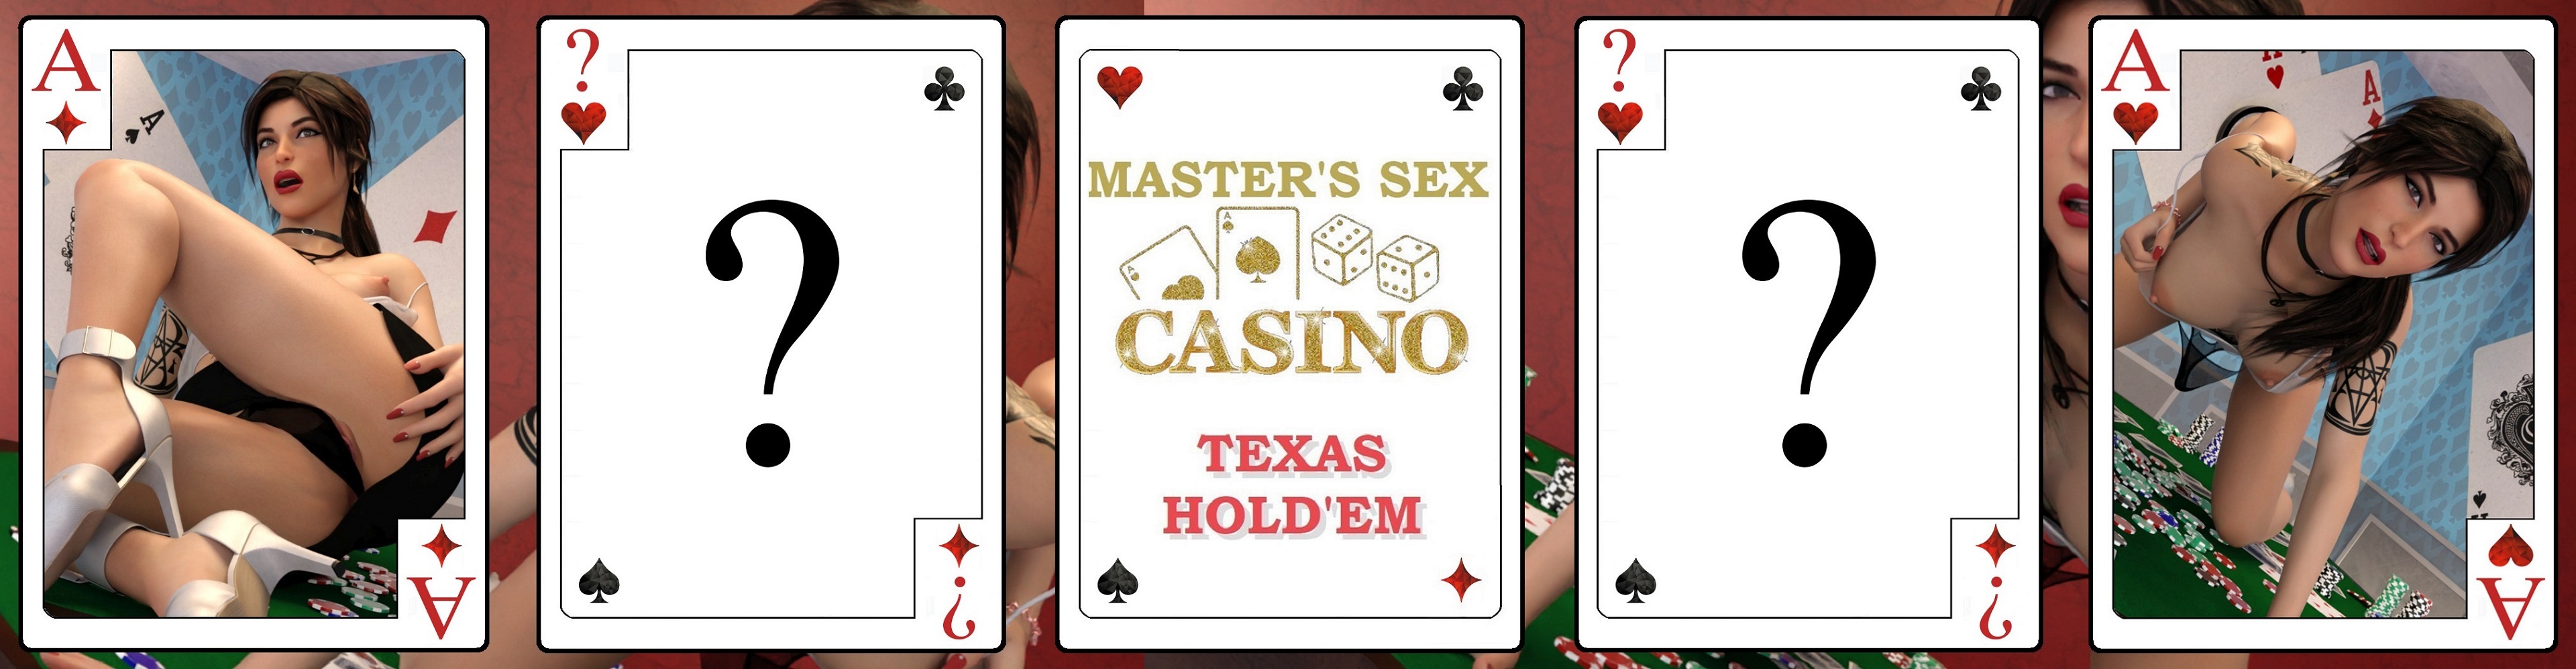 Master's Sex Casino - Texas Hold'em Standard Edition